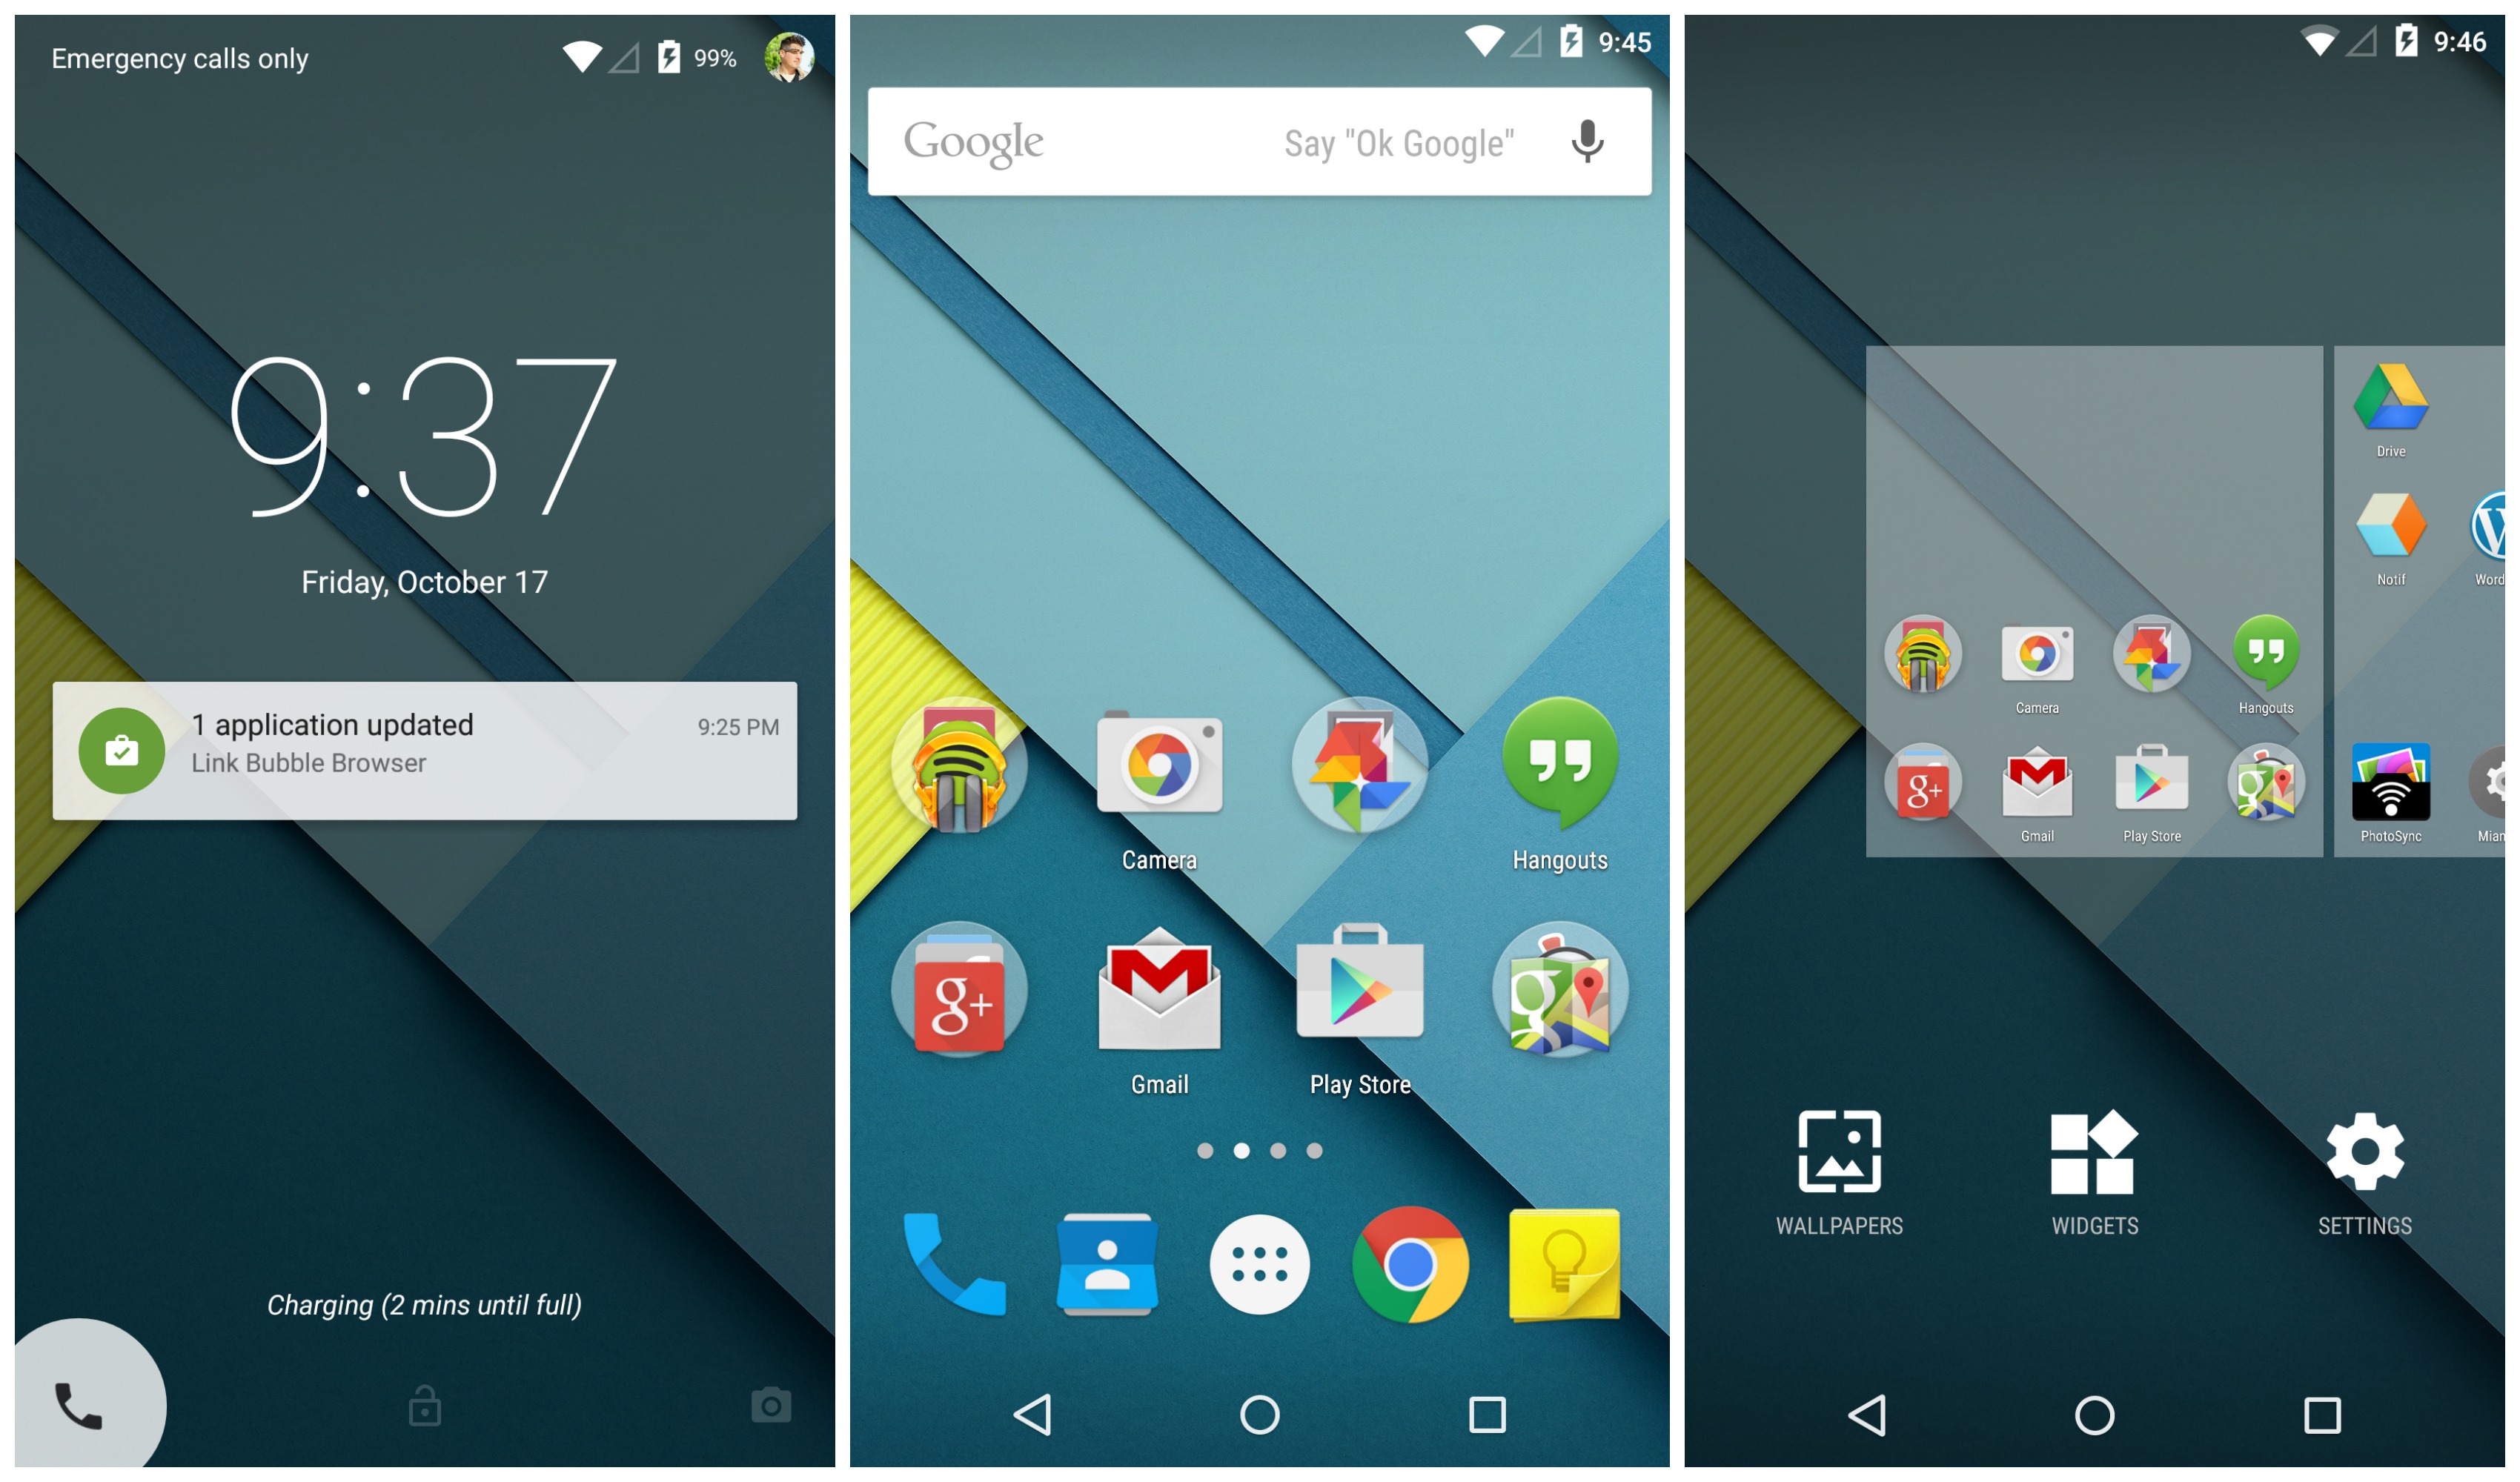 Apk андроид 0. Android 5.1 Lollipop. Android 5.0 / 5.1 Lollipop. Версия андроид 5.1. Android 5.0 Lollipop 2014.